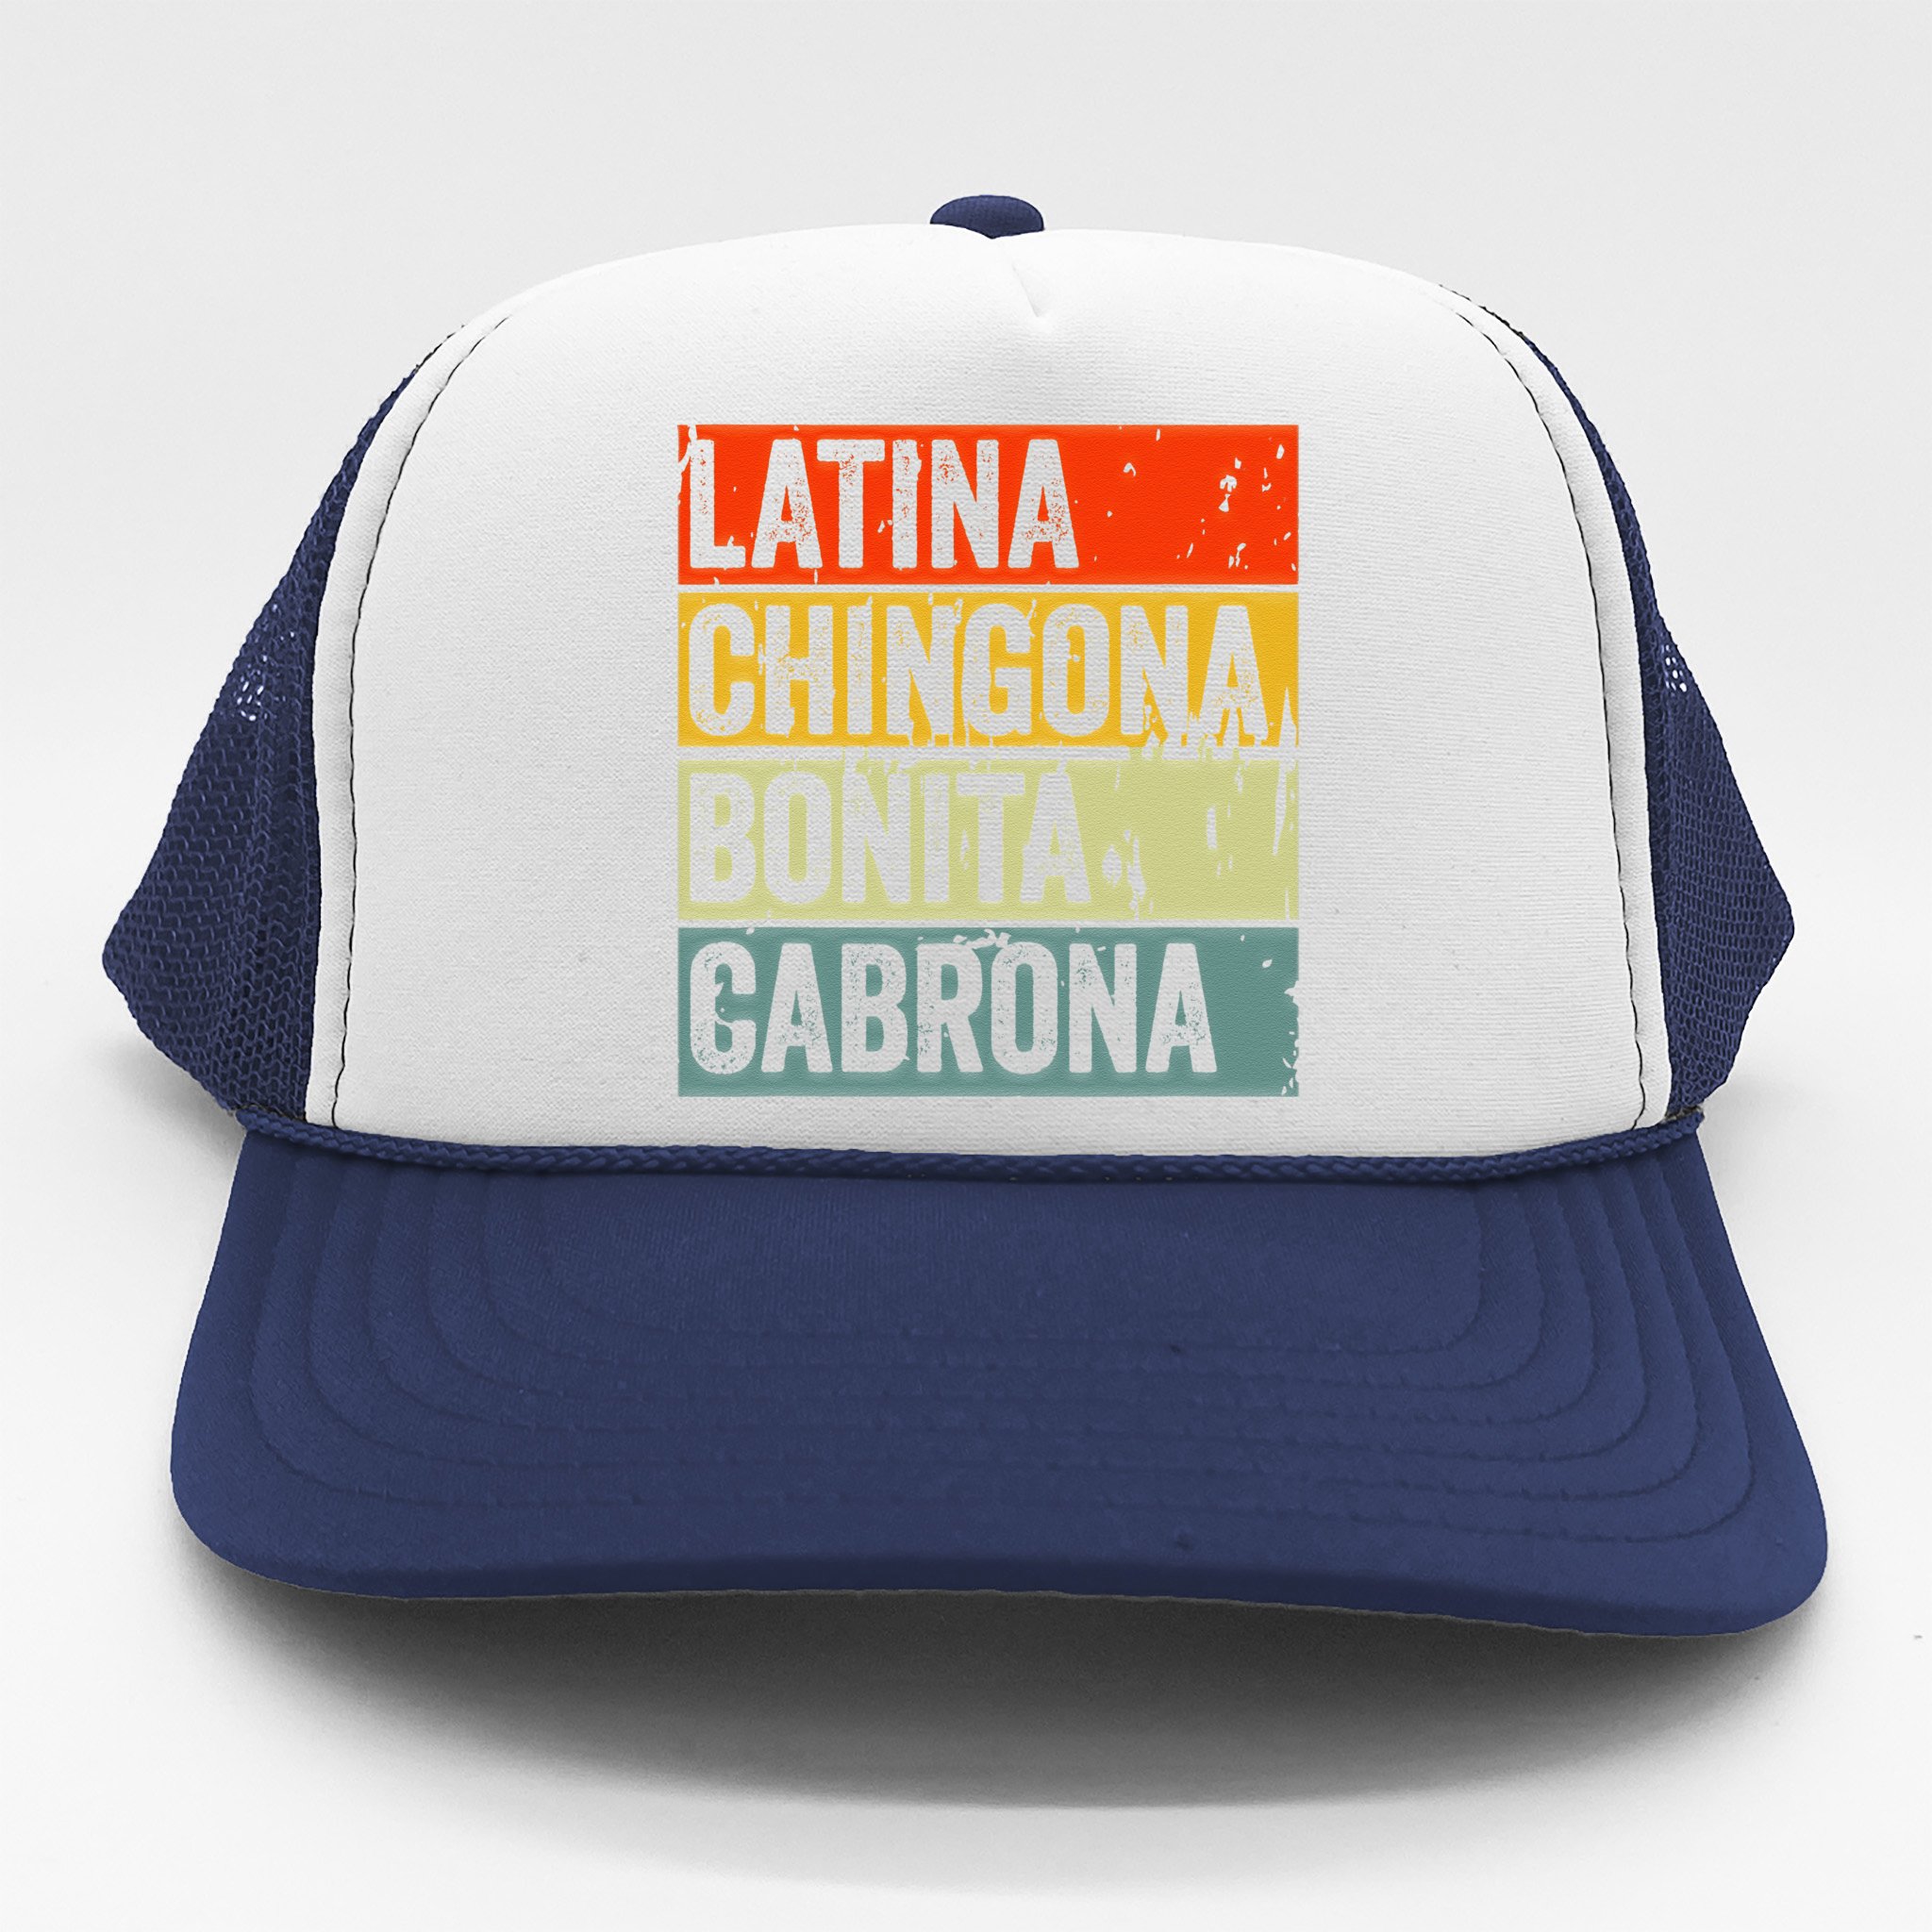 It's Colombia Not Columbia Trucker Hat